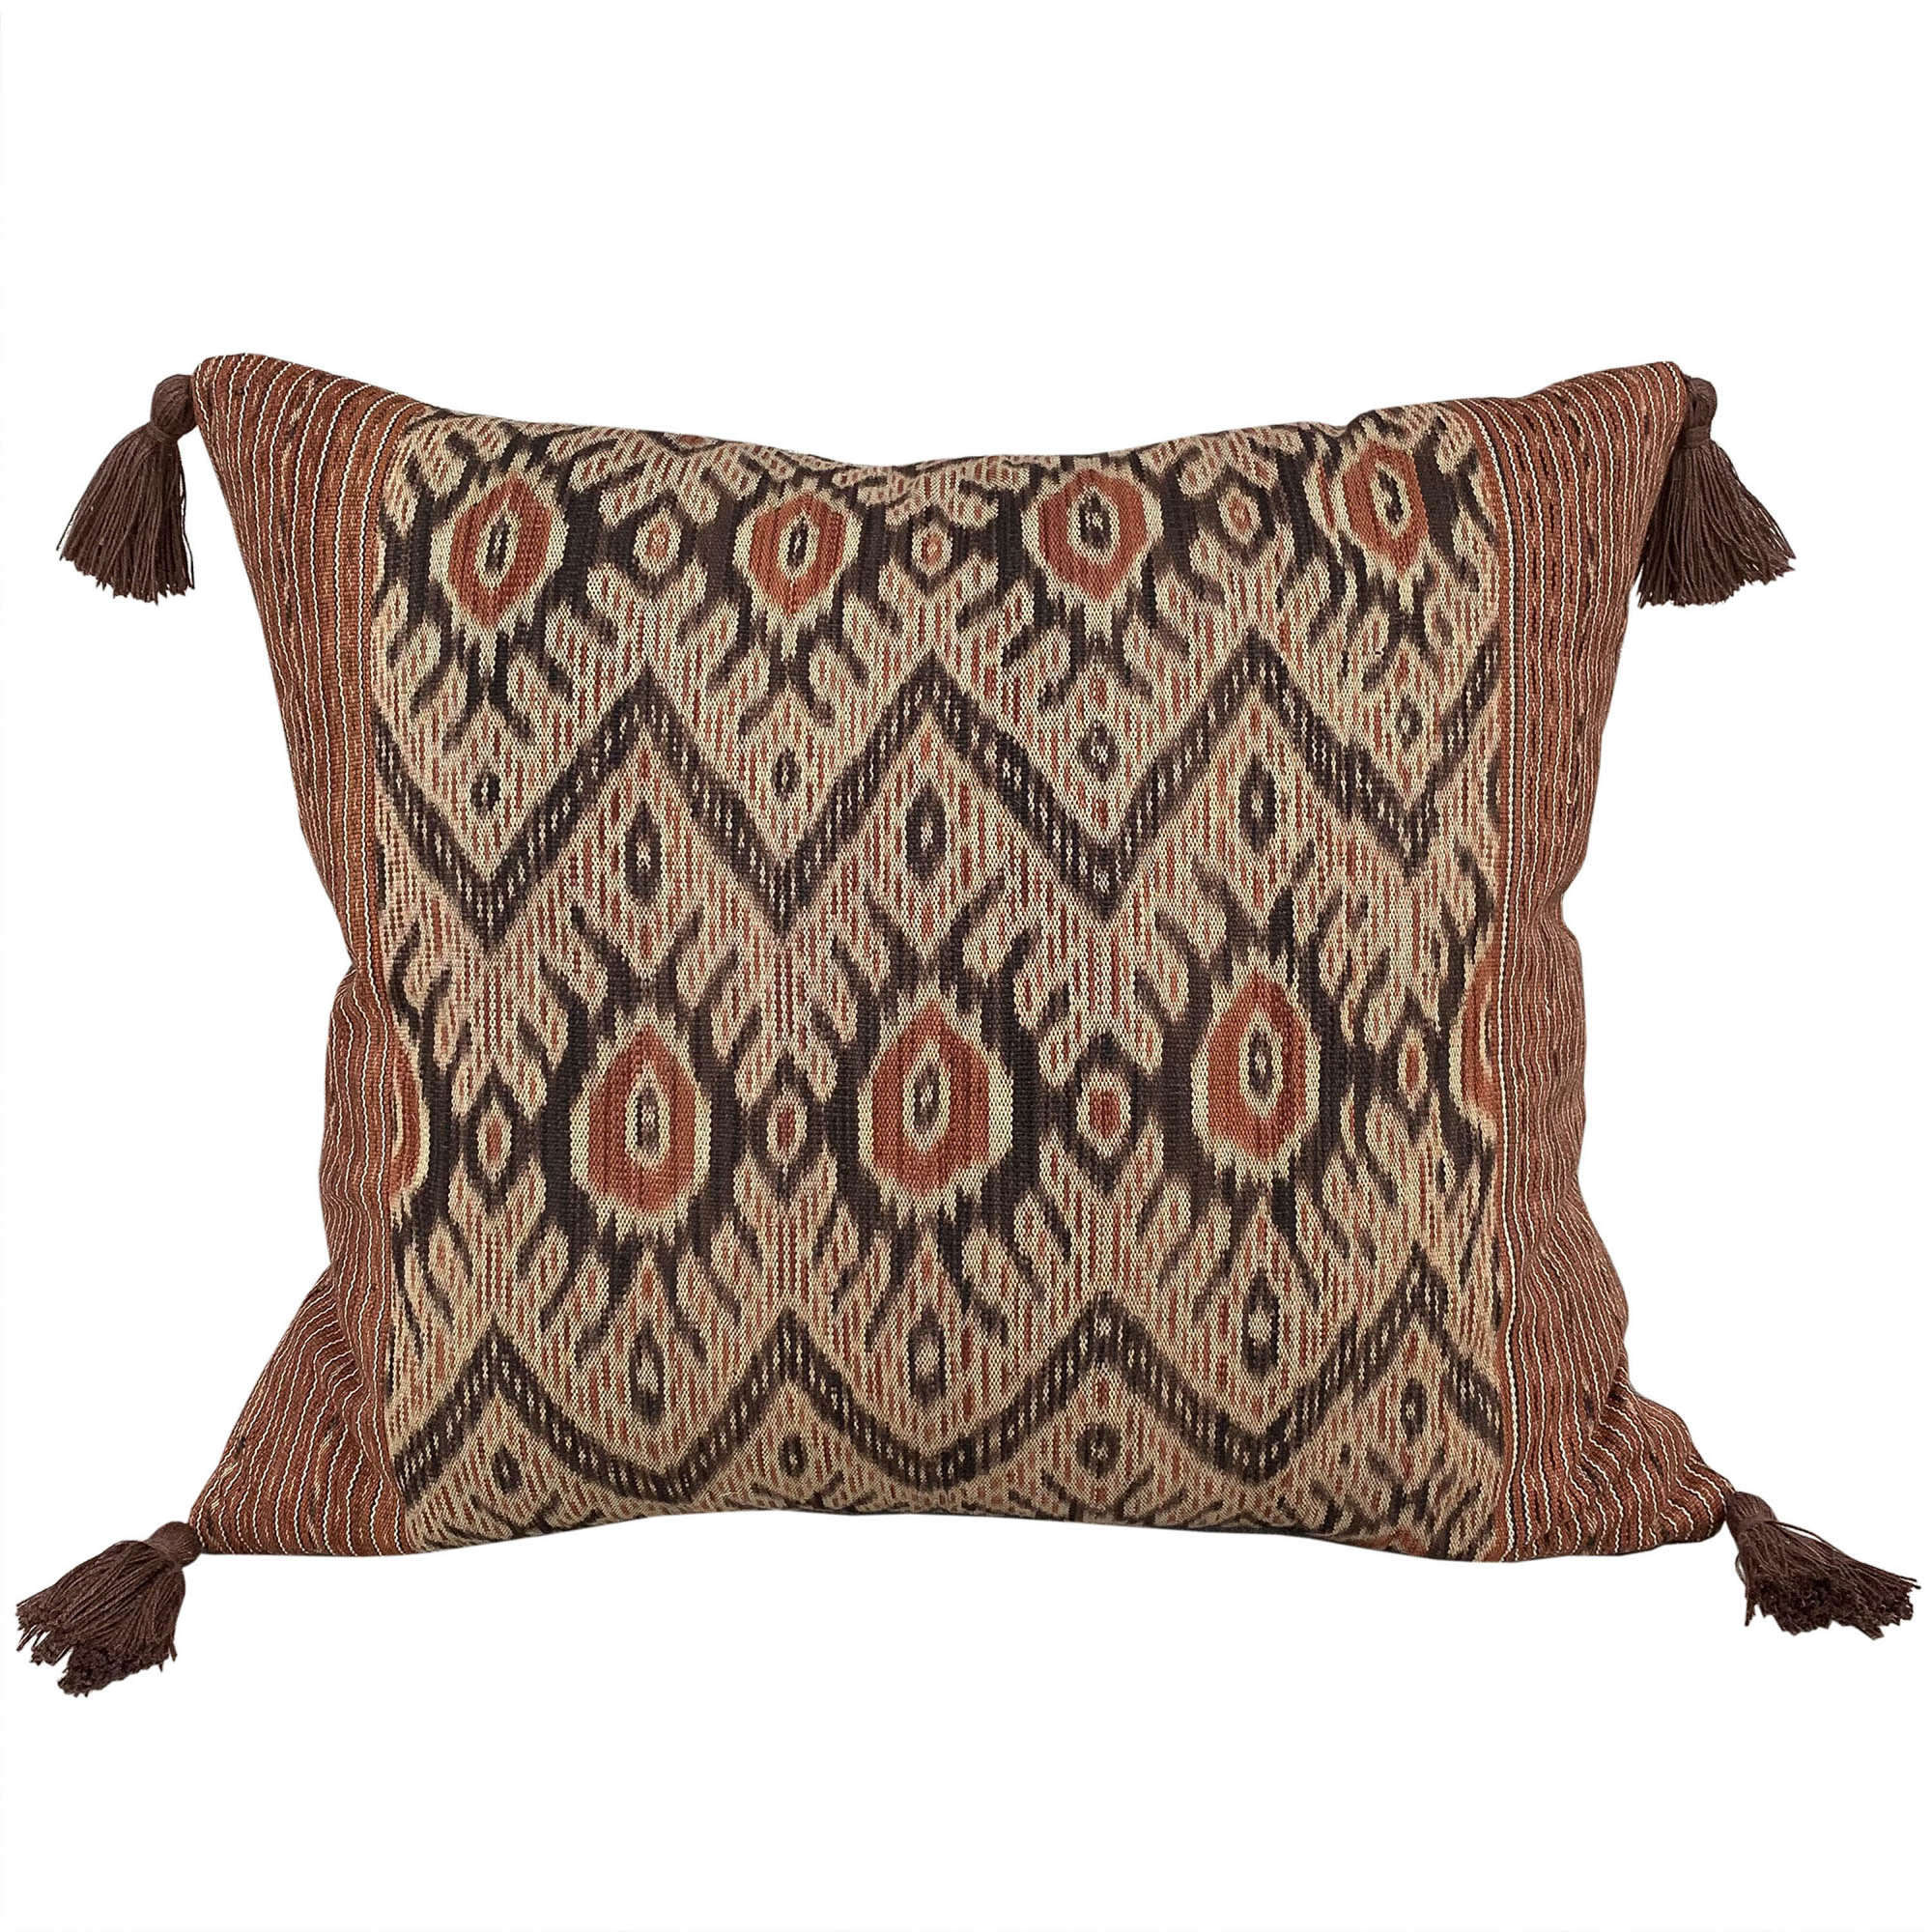 Timot futus cushions with brown tassels